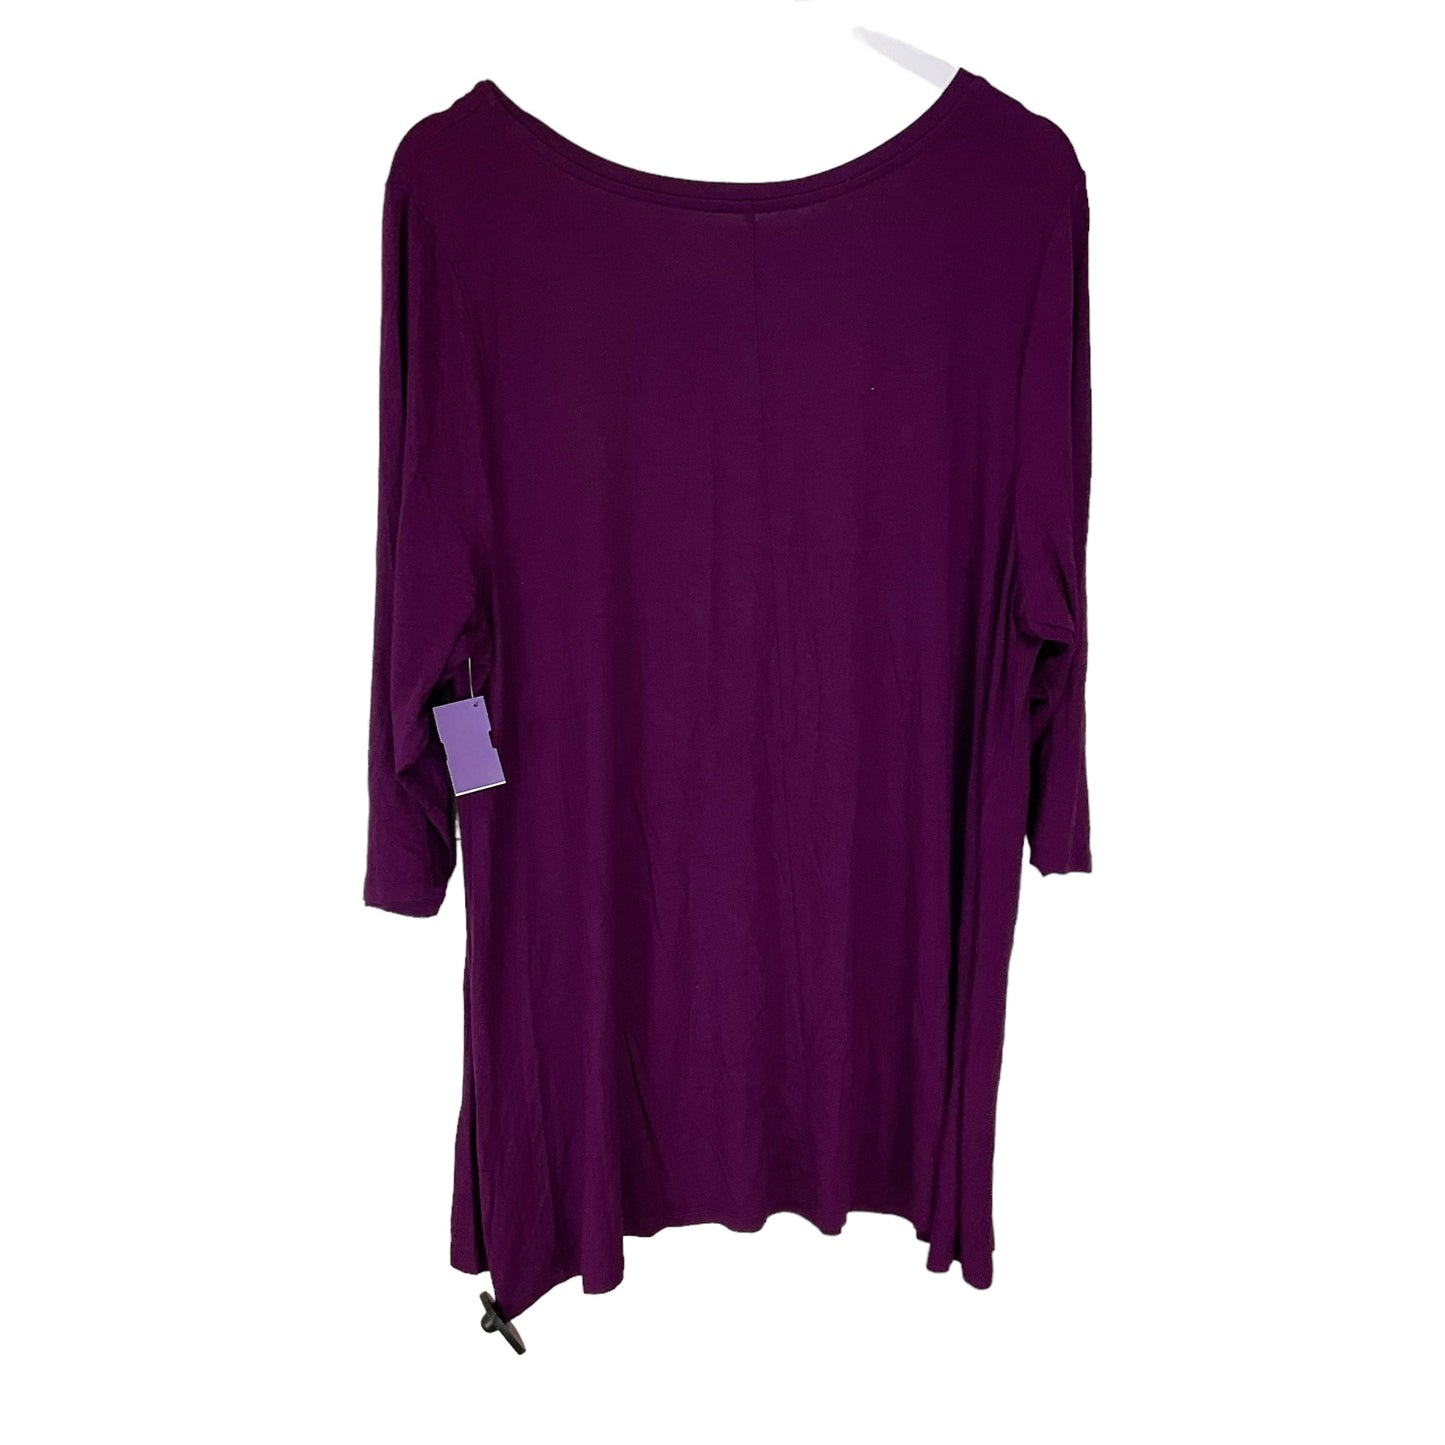 Purple Top Short Sleeve Basic Lane Bryant, Size 1x